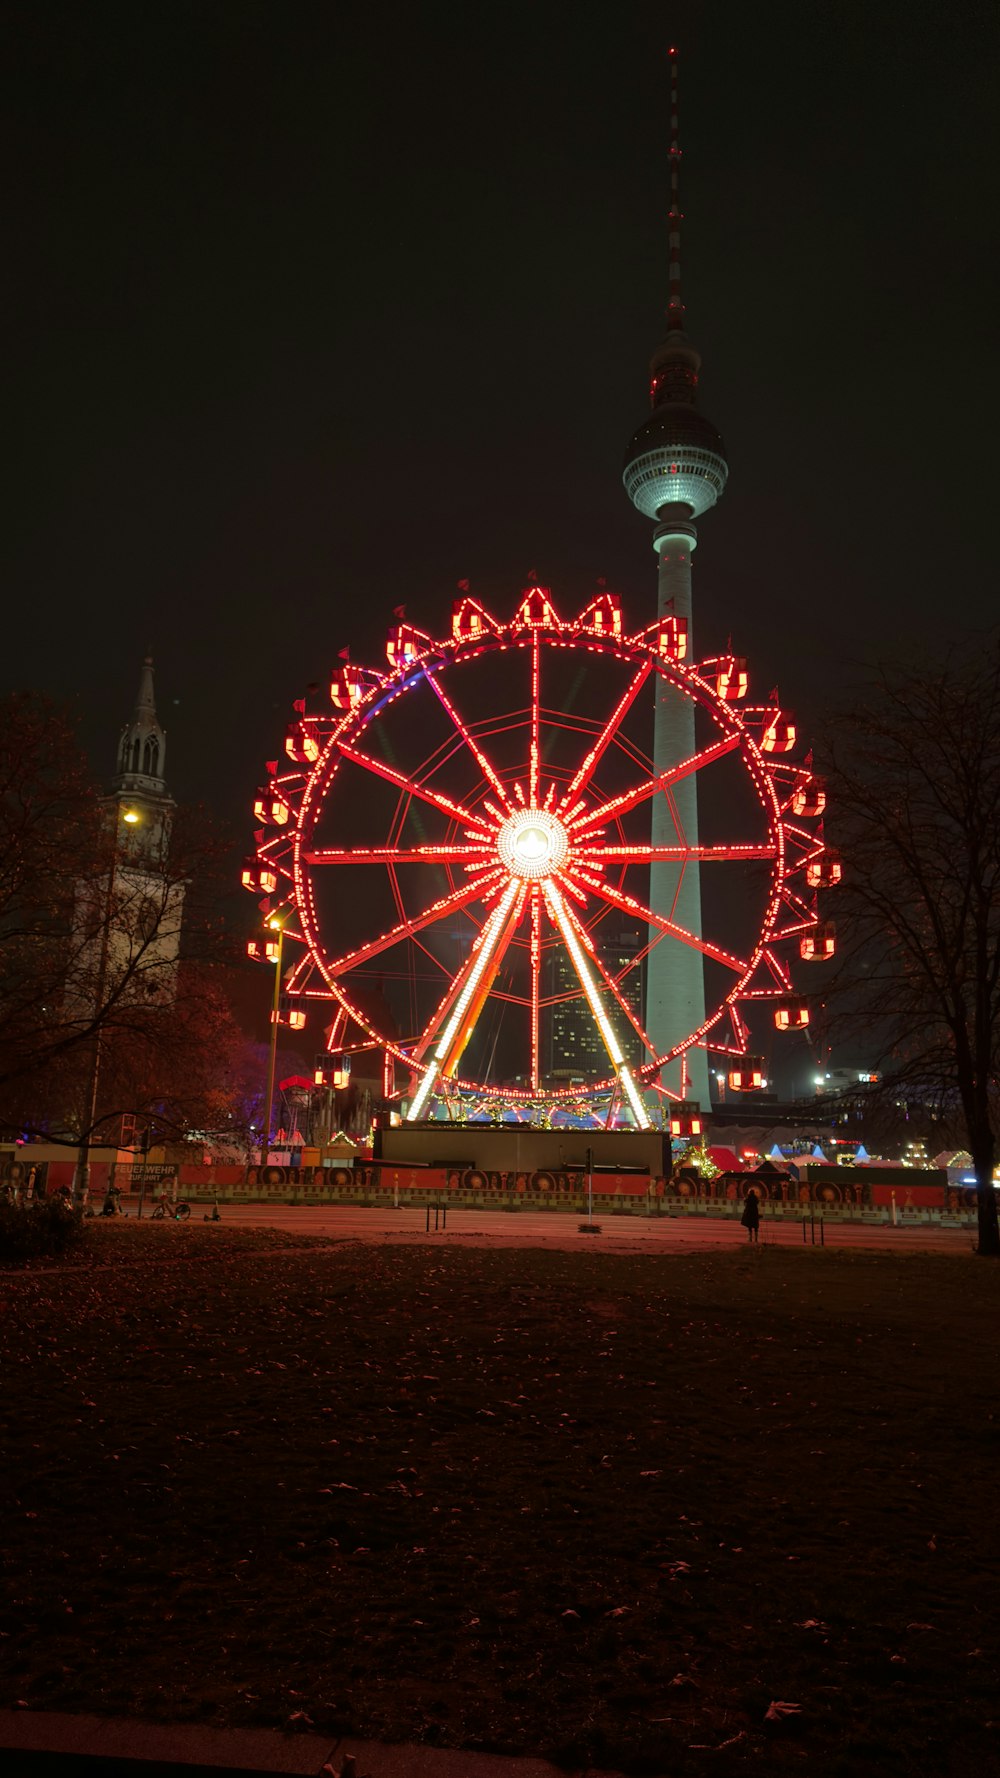 Una ruota panoramica illuminata di notte in un parco